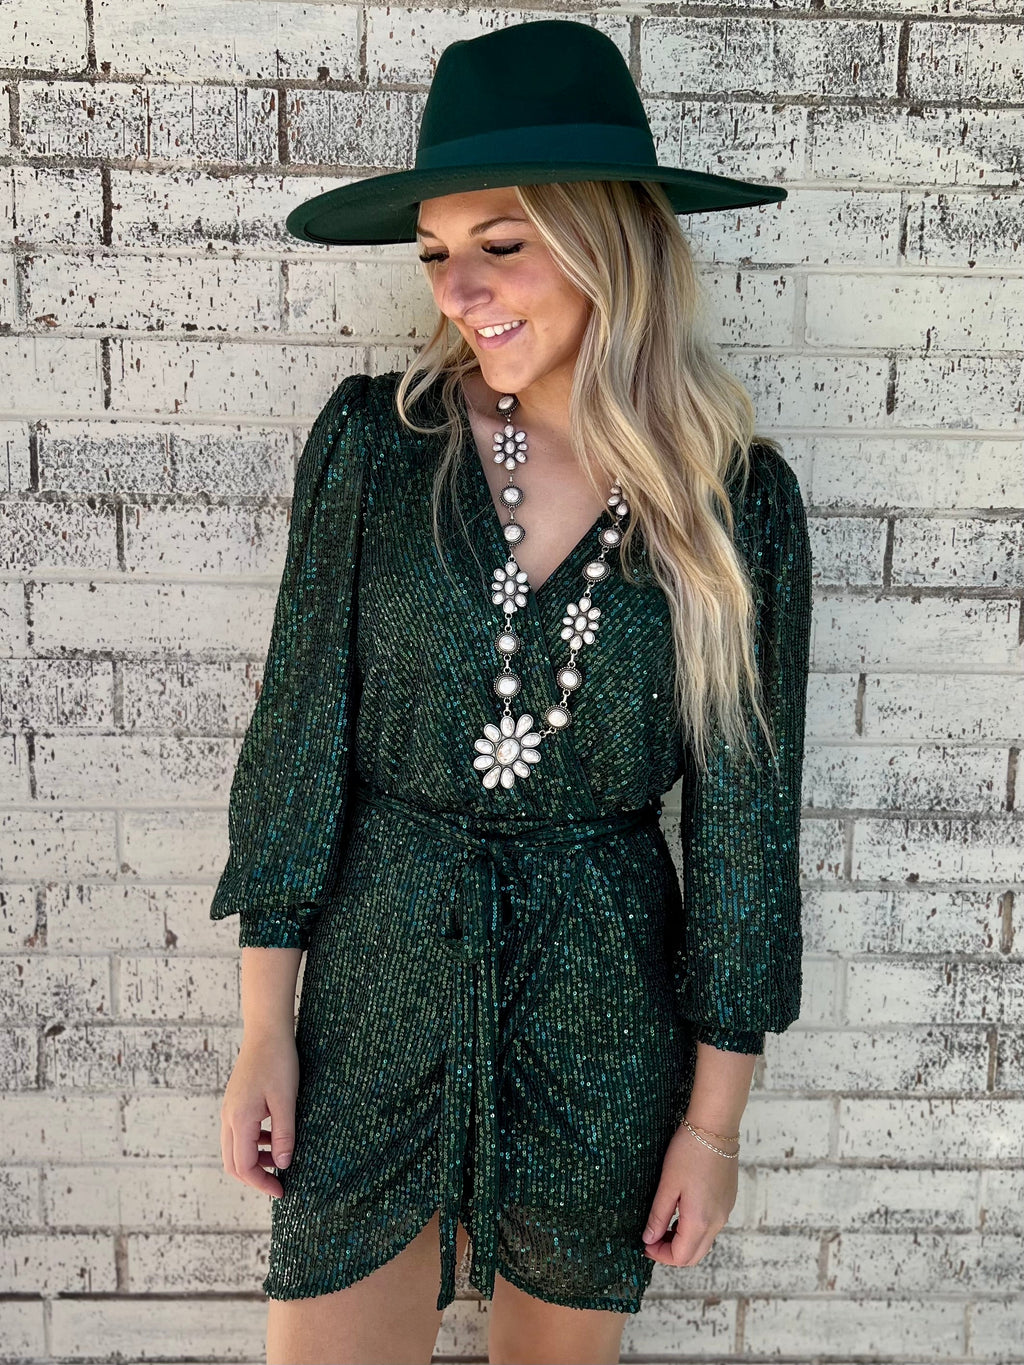 Sparkling Evergreen Dress | gussieduponline